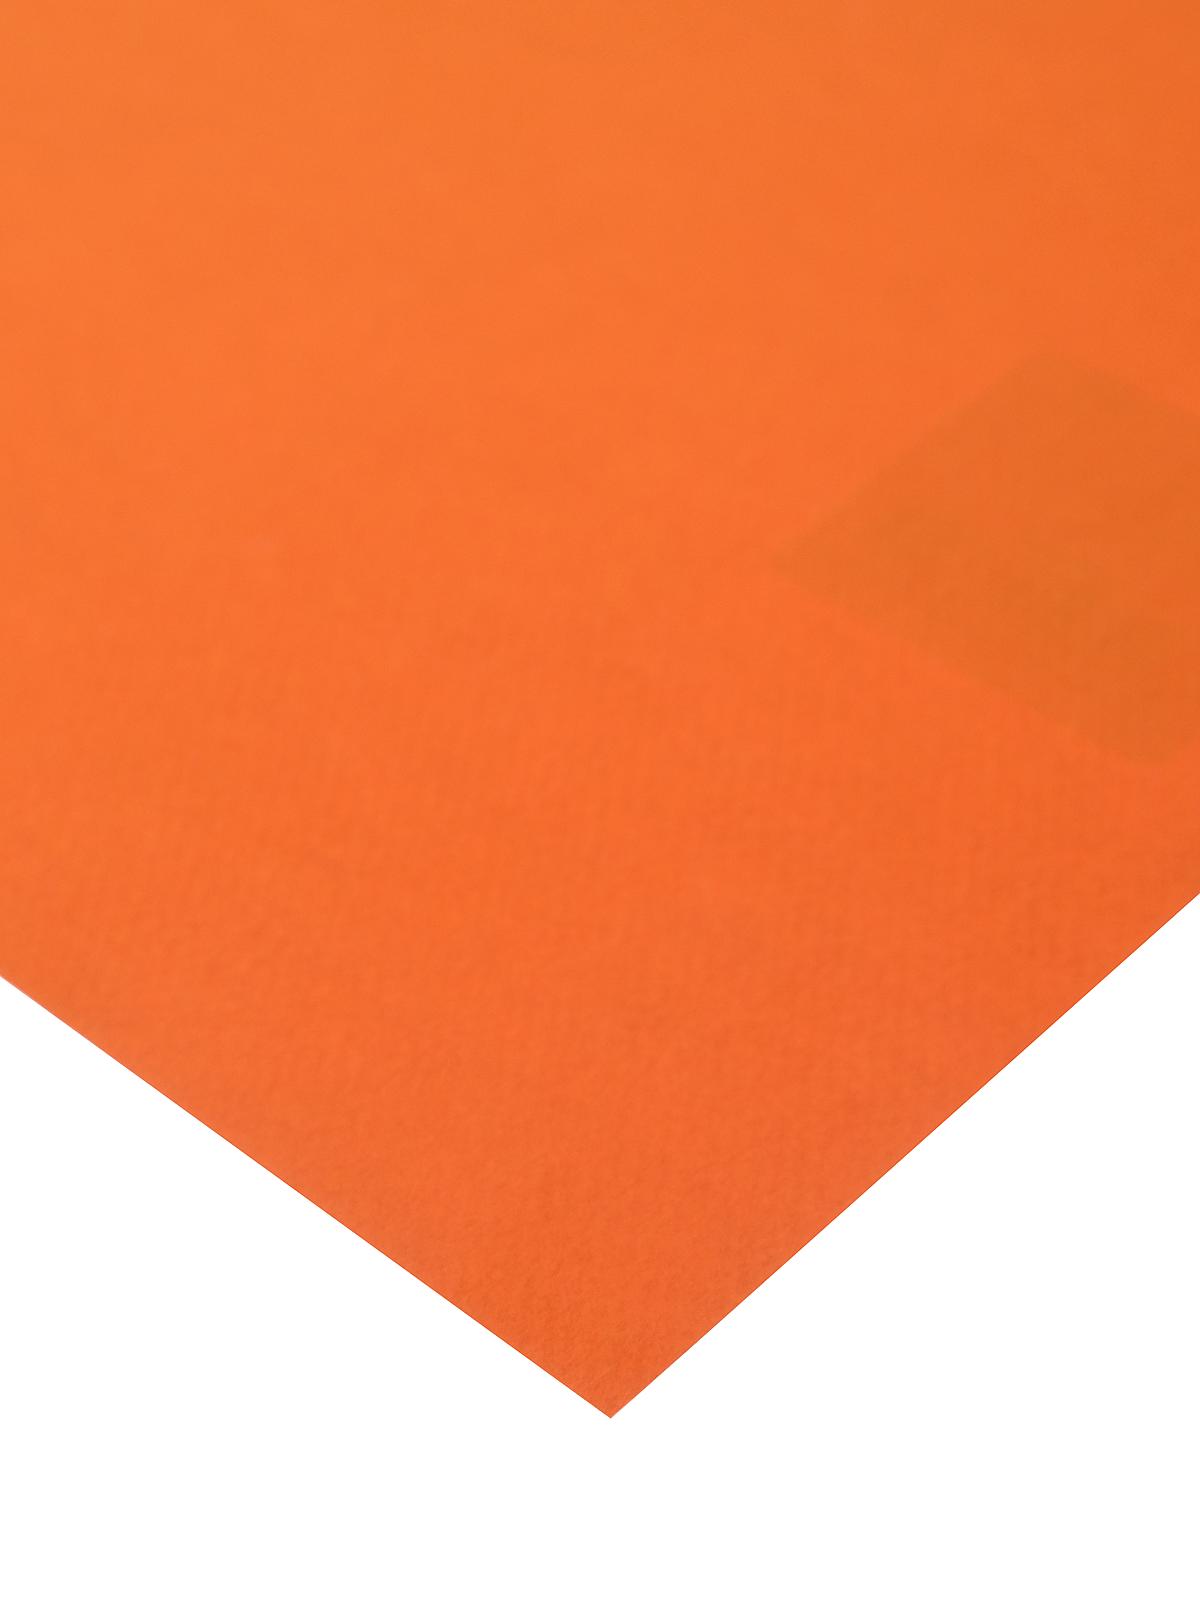 Mi-teintes Tinted Paper Orange 8.5 In. X 11 In.